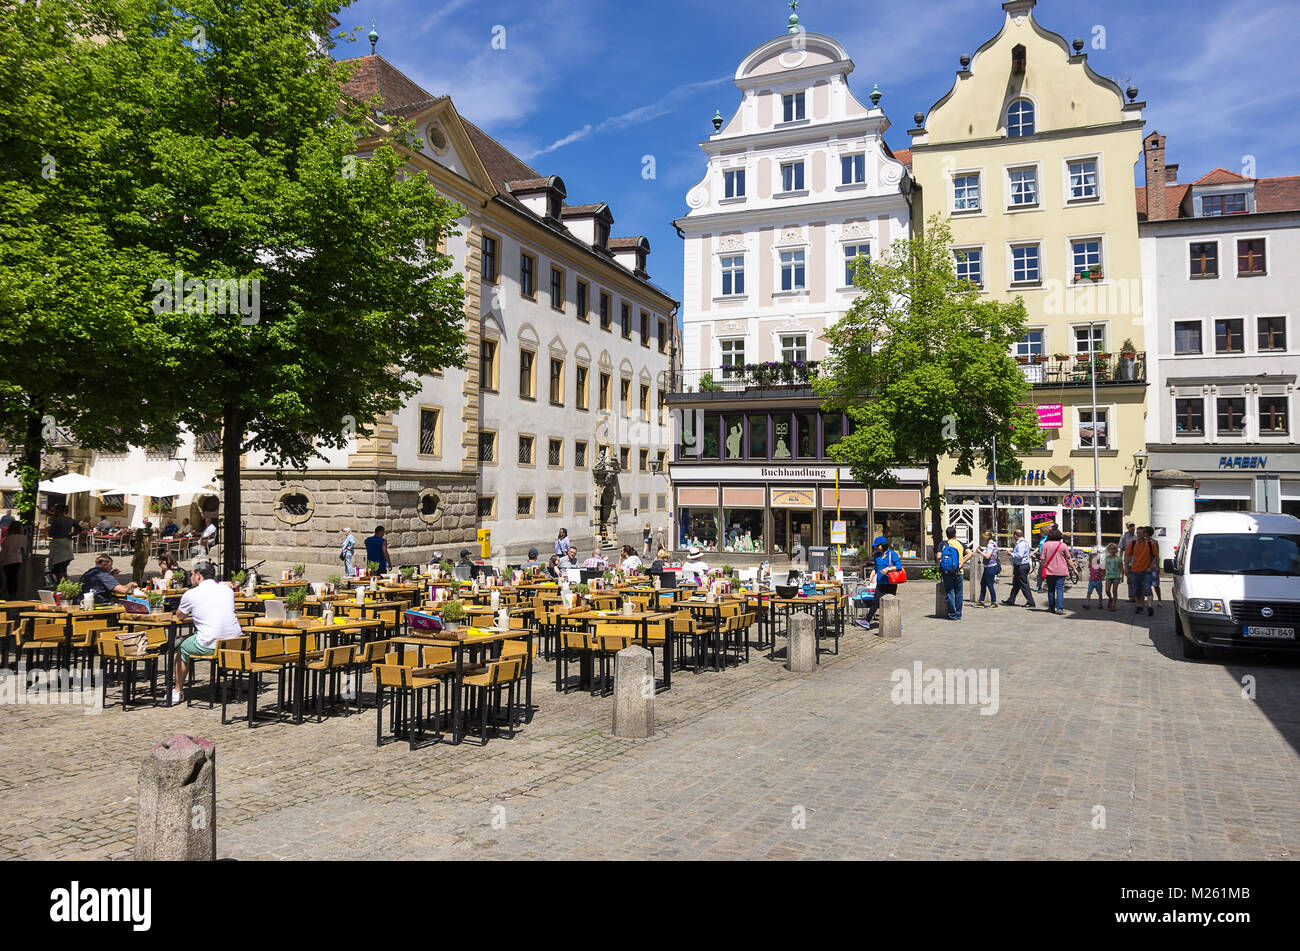 Historic architecture and street scene on Kohlenmarkt Square in Regensburg, Bavaria, Germany. Stock Photo